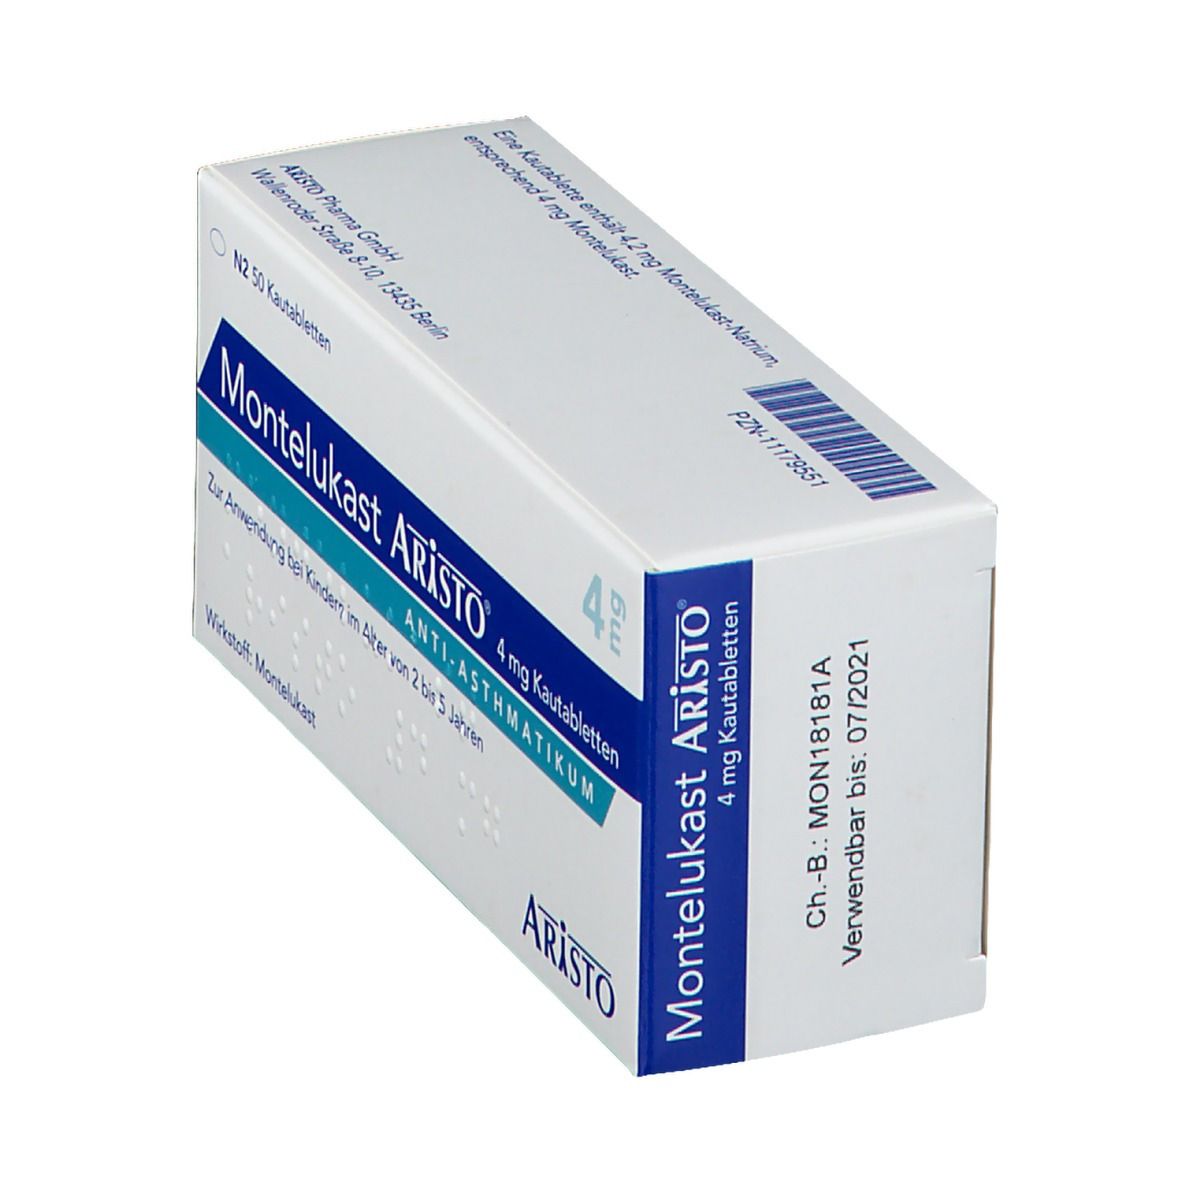 Montelukast Aristo® 4 mg